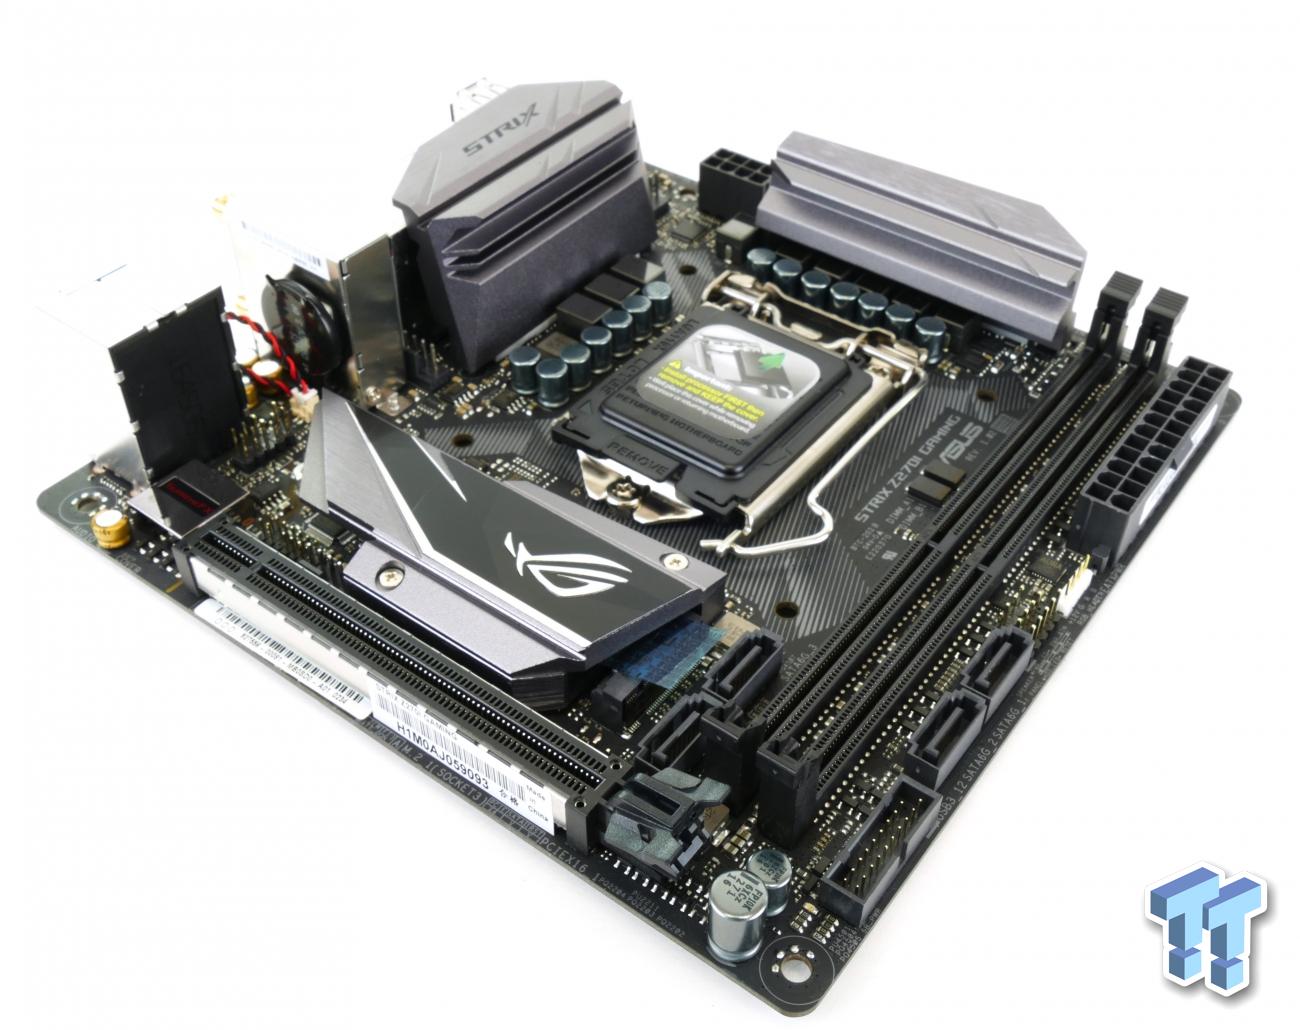 ASUS ROG STRIX Z270I Gaming Mini-ITX Motherboard Review | TweakTown